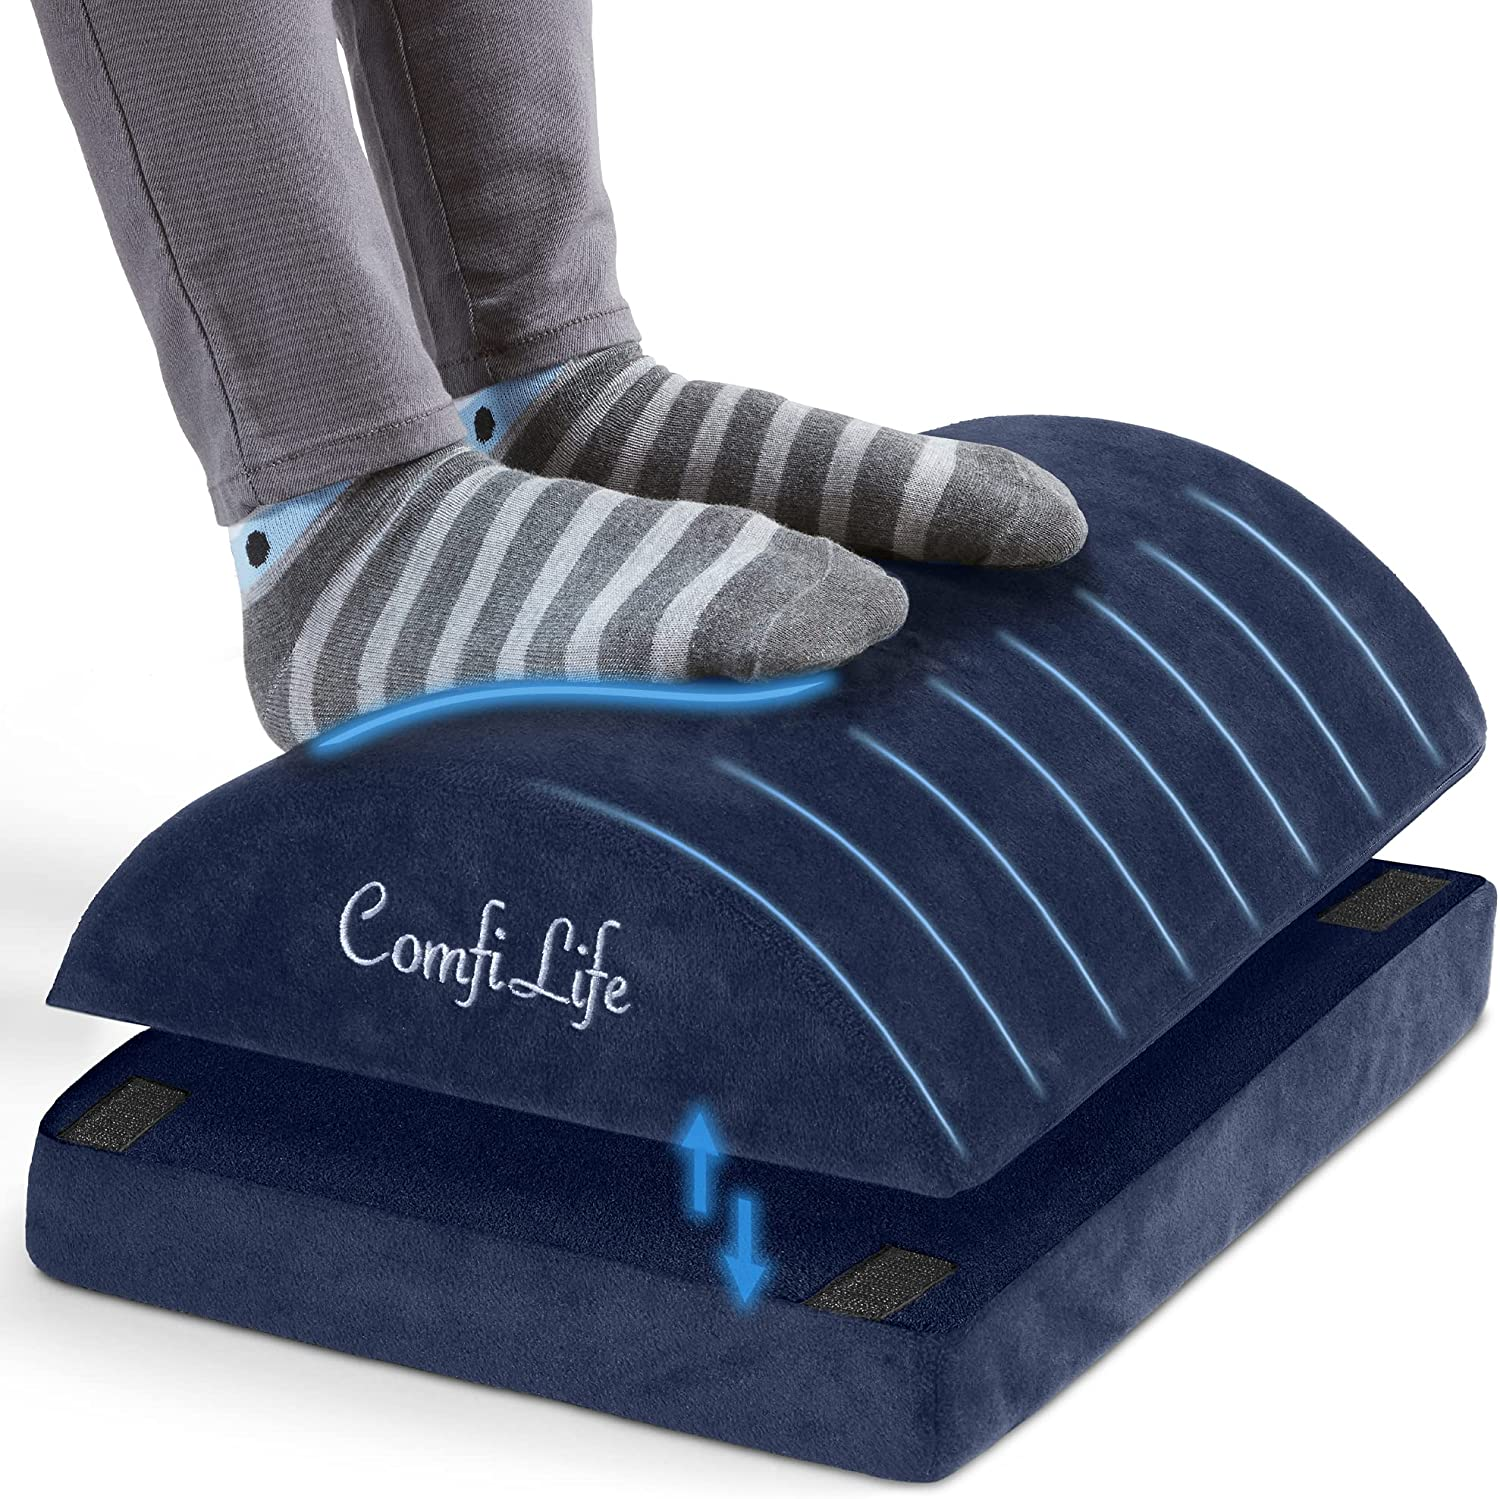 Adjustable Memory Foam Foot Rest